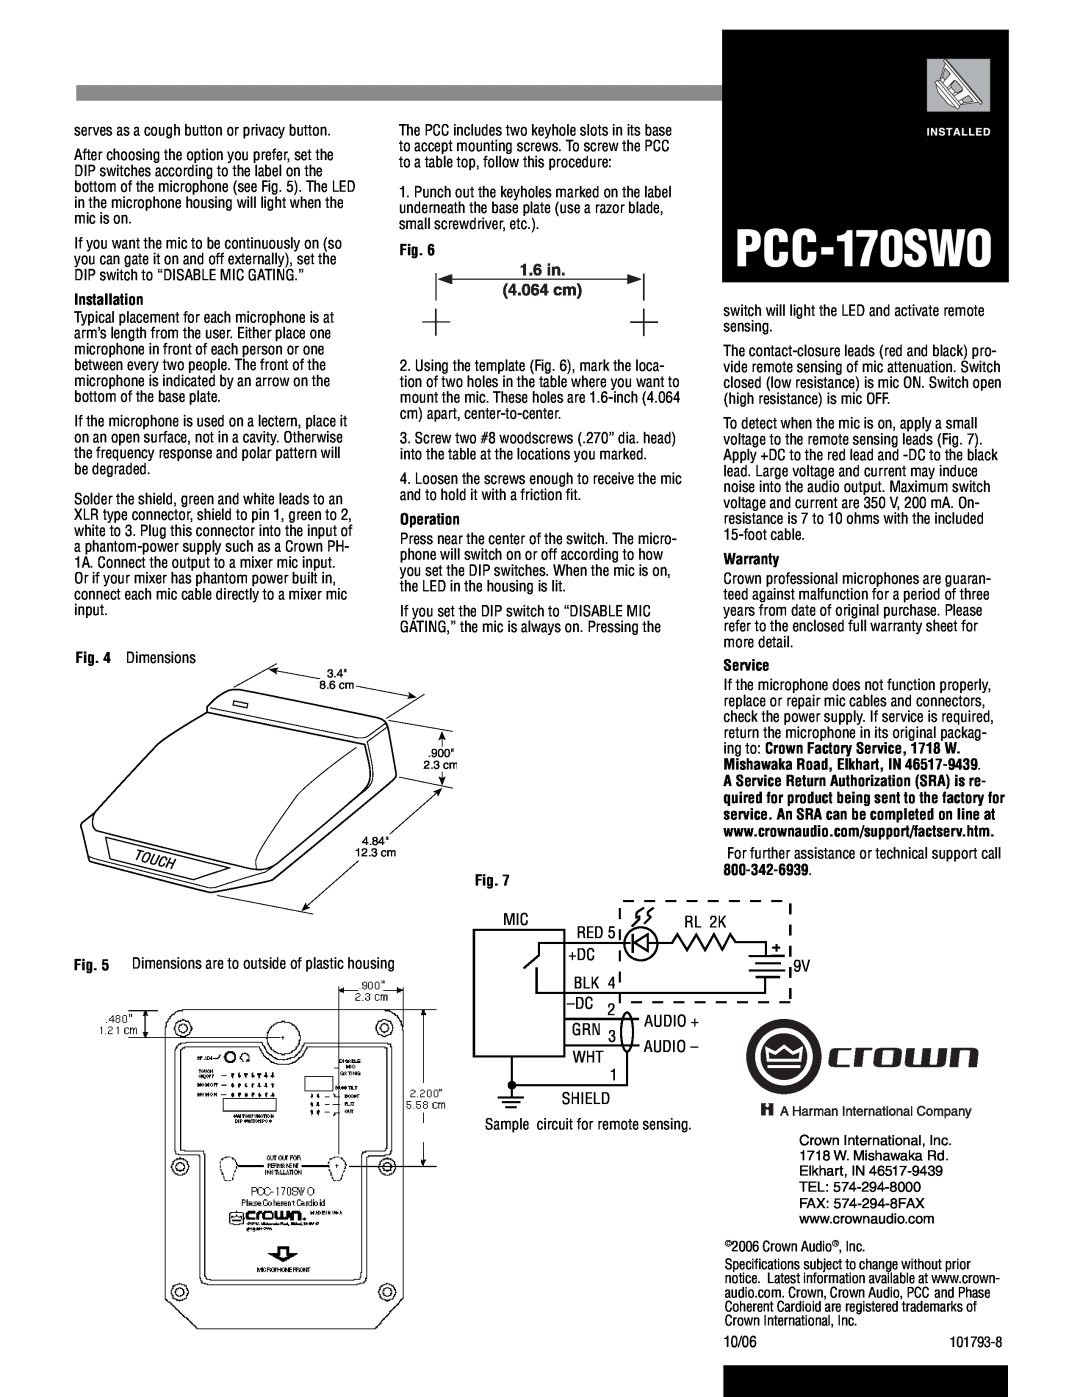 Crown Audio PCC-170SWO specifications Installation, Operation, Warranty, Service, RL 2K, Shield 